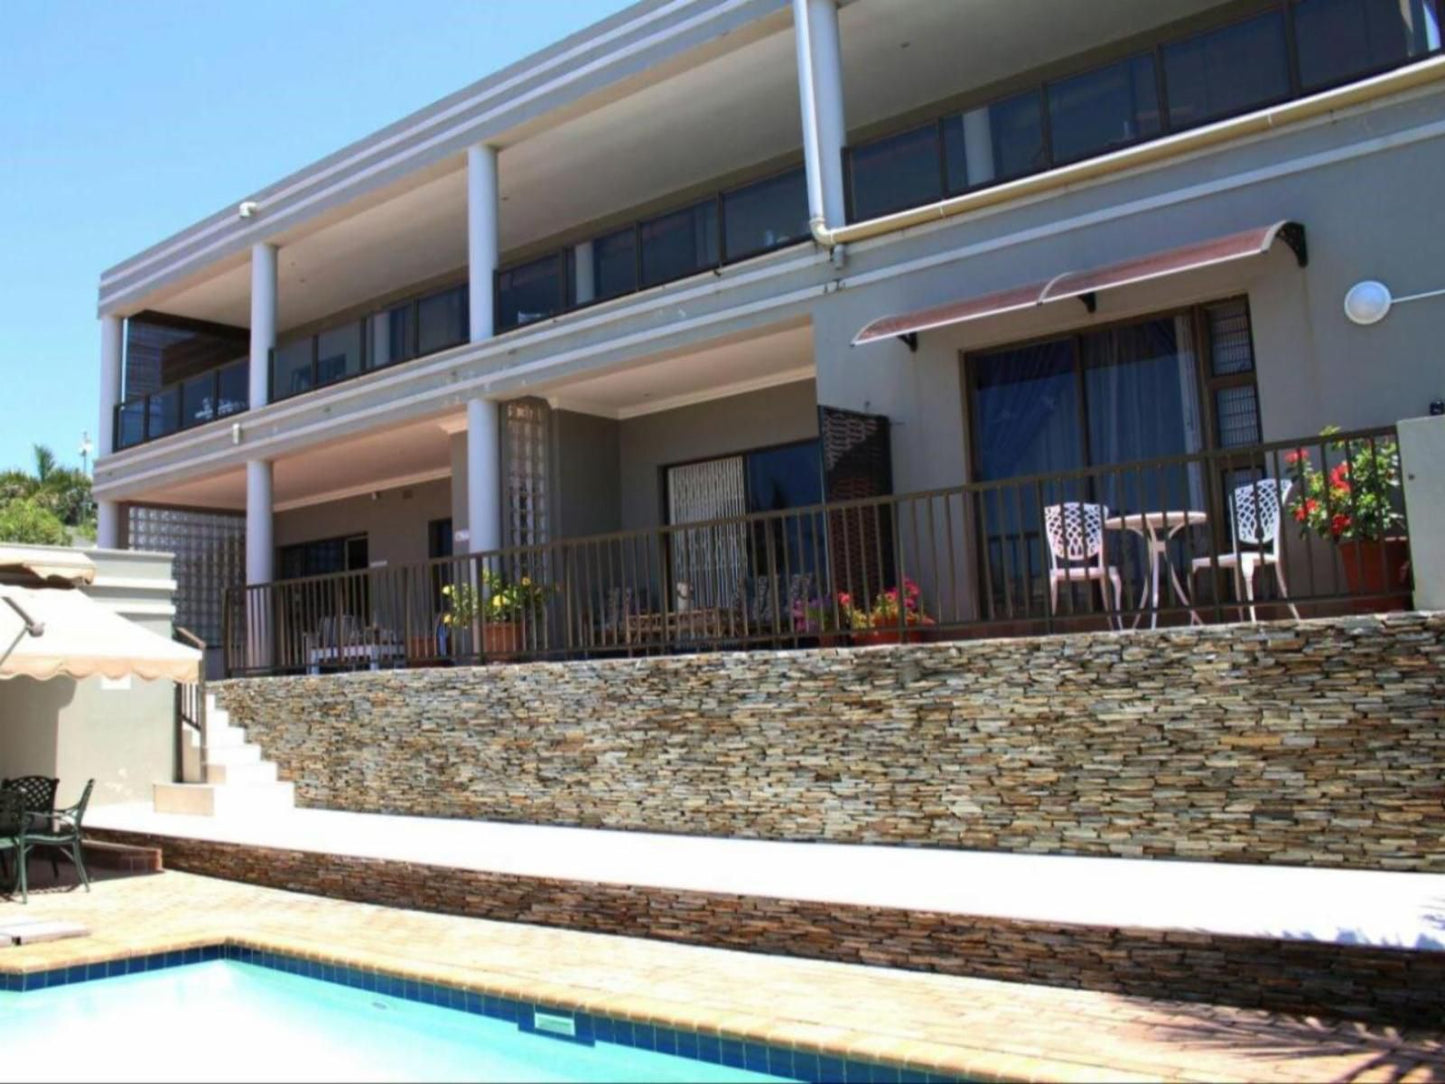 At Dom S Bandb Zimbali Coastal Estate Ballito Kwazulu Natal South Africa House, Building, Architecture, Swimming Pool